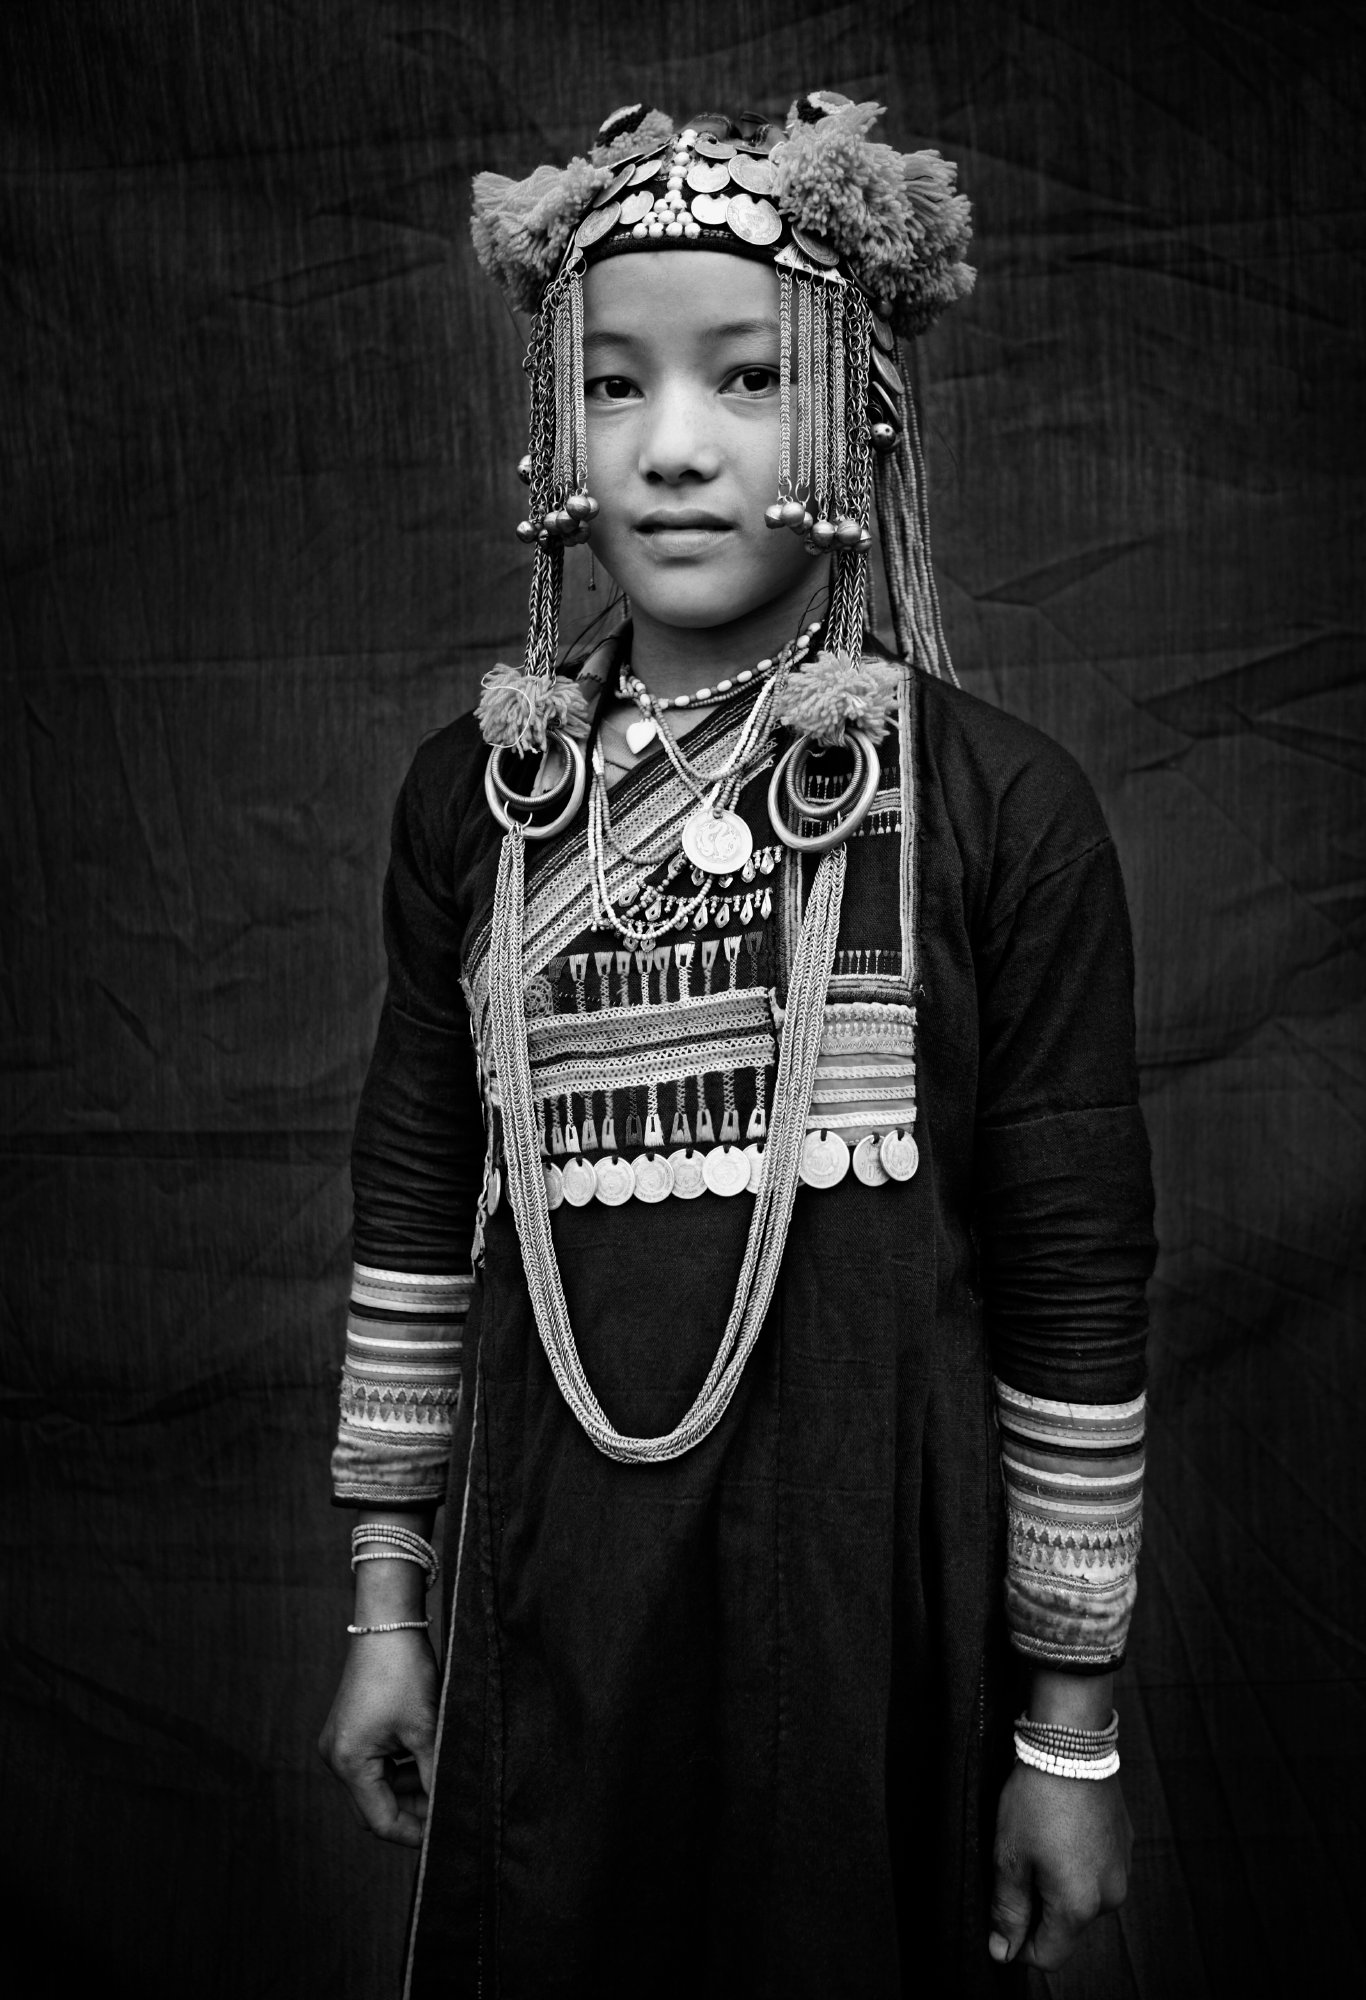 Laos Black & White photographs - Running Reel